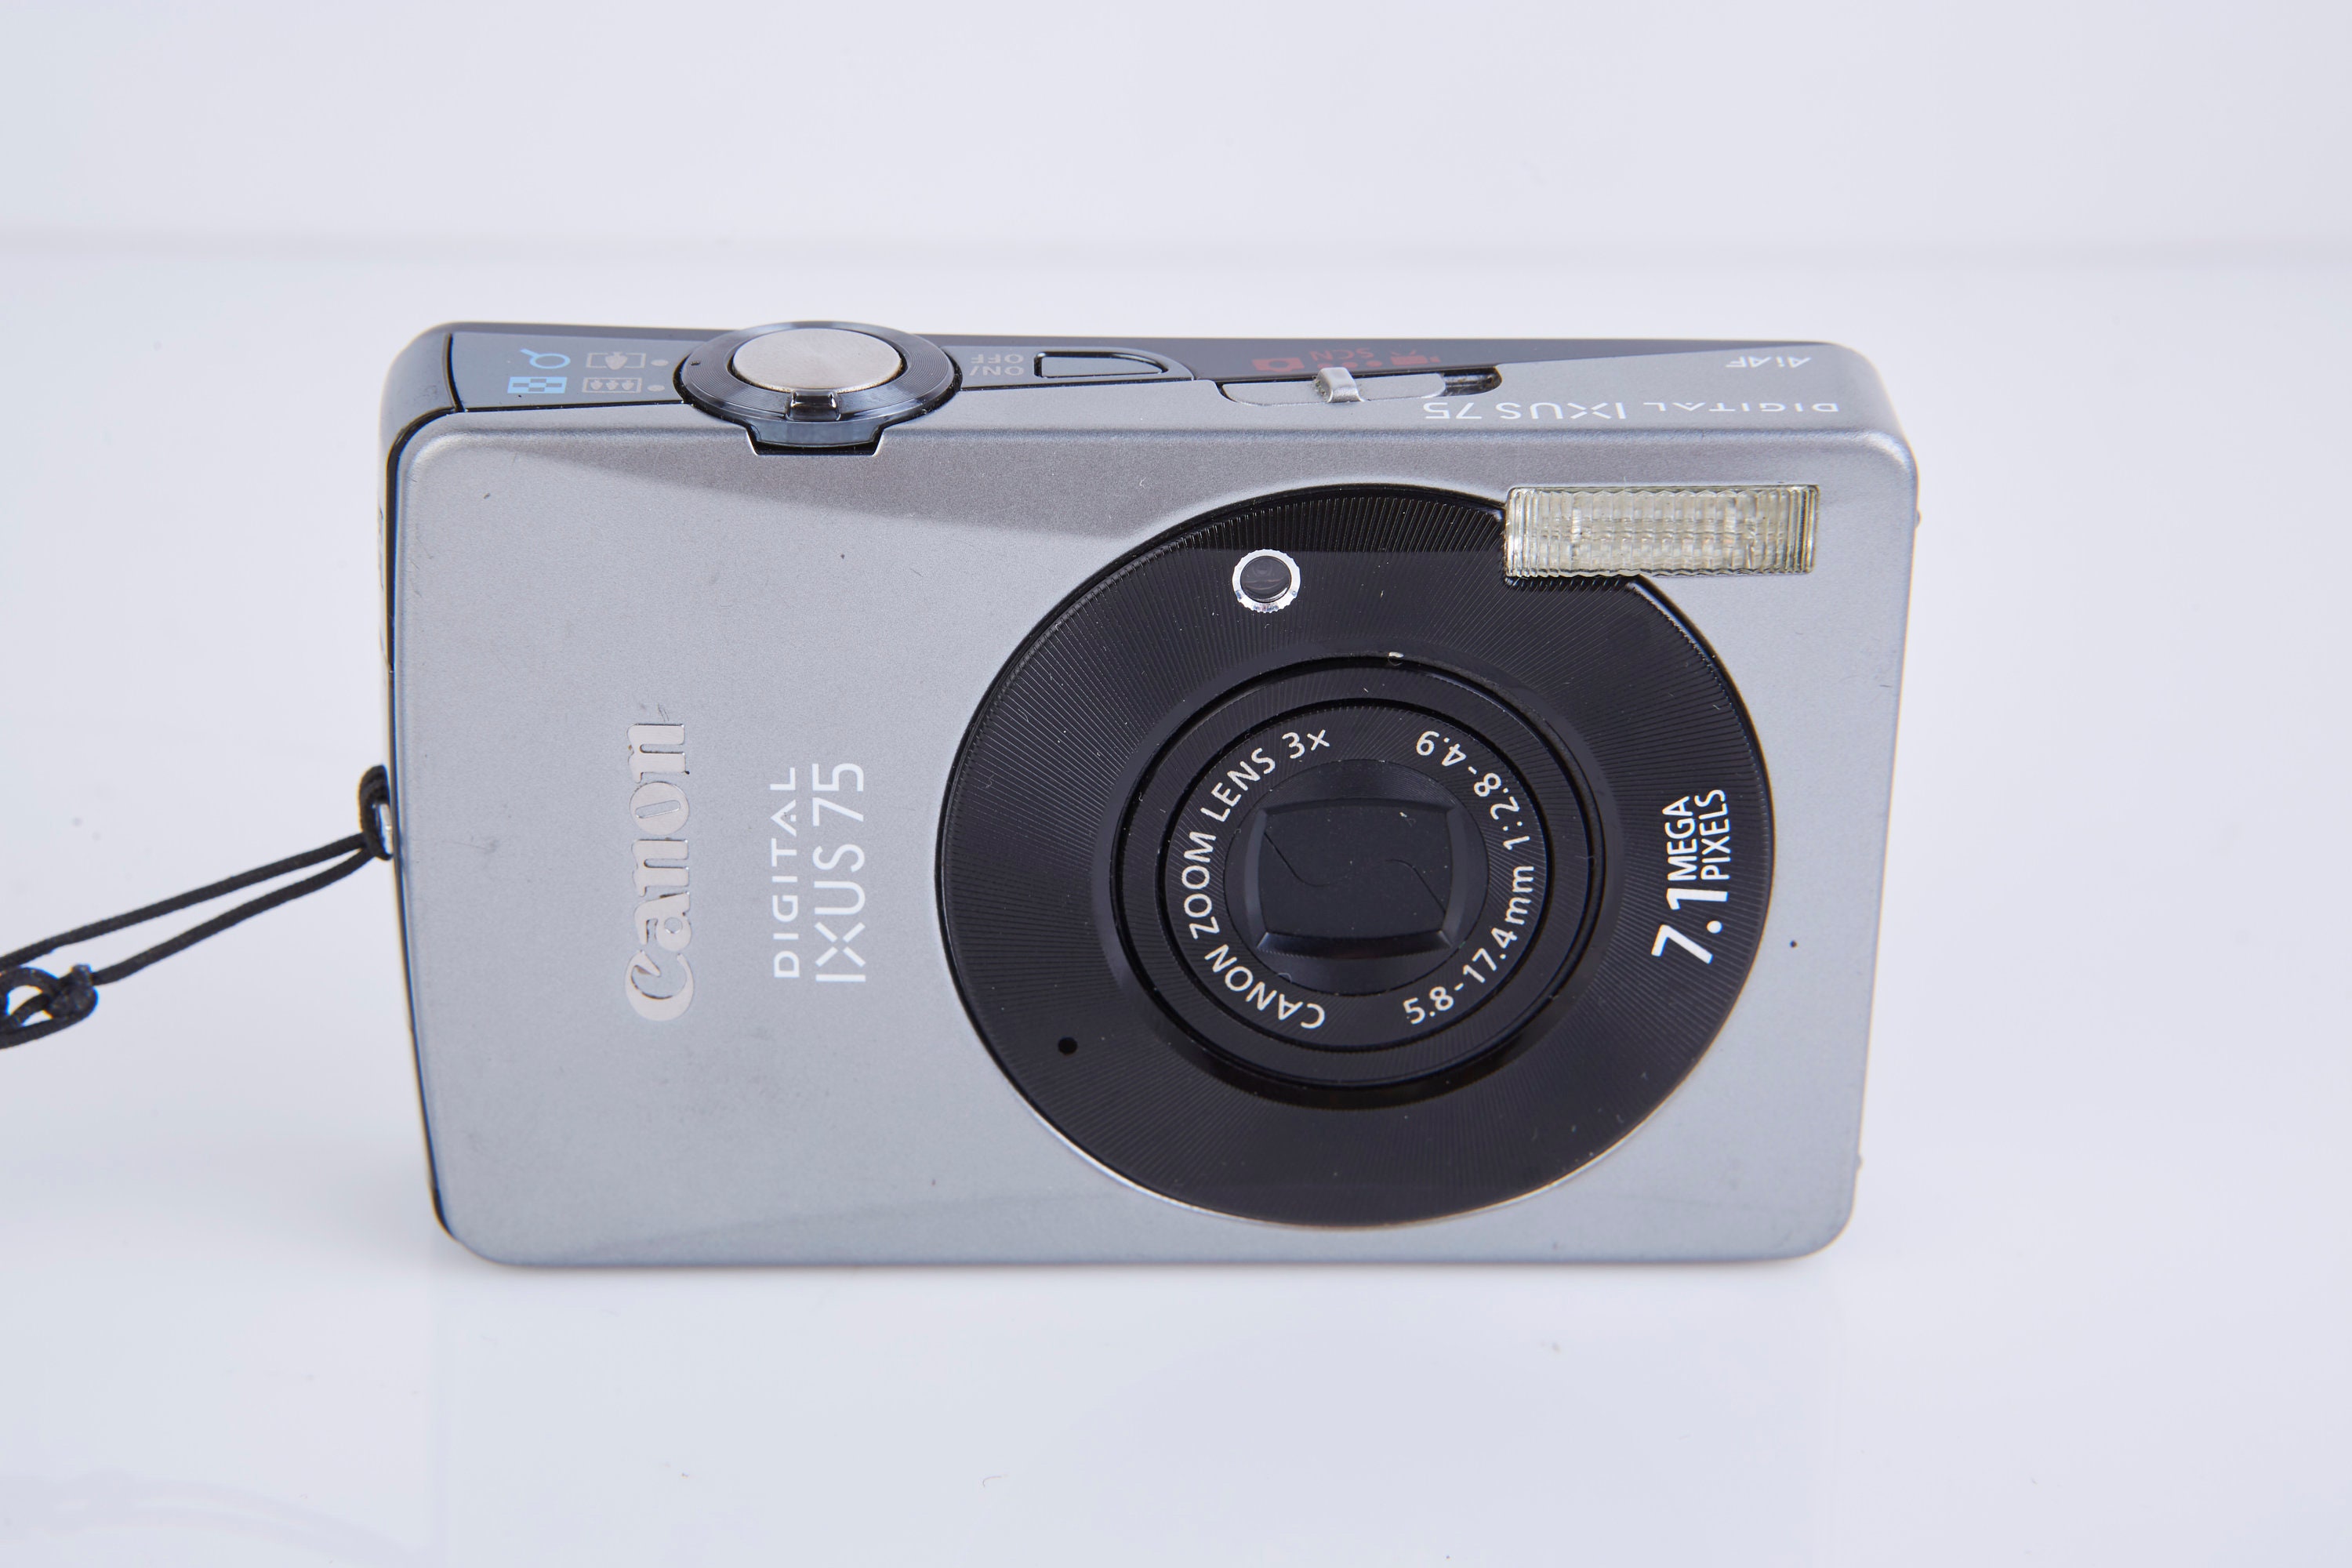 Canon IXUS 75 7.1MP Digital Camera - Silver for sale online